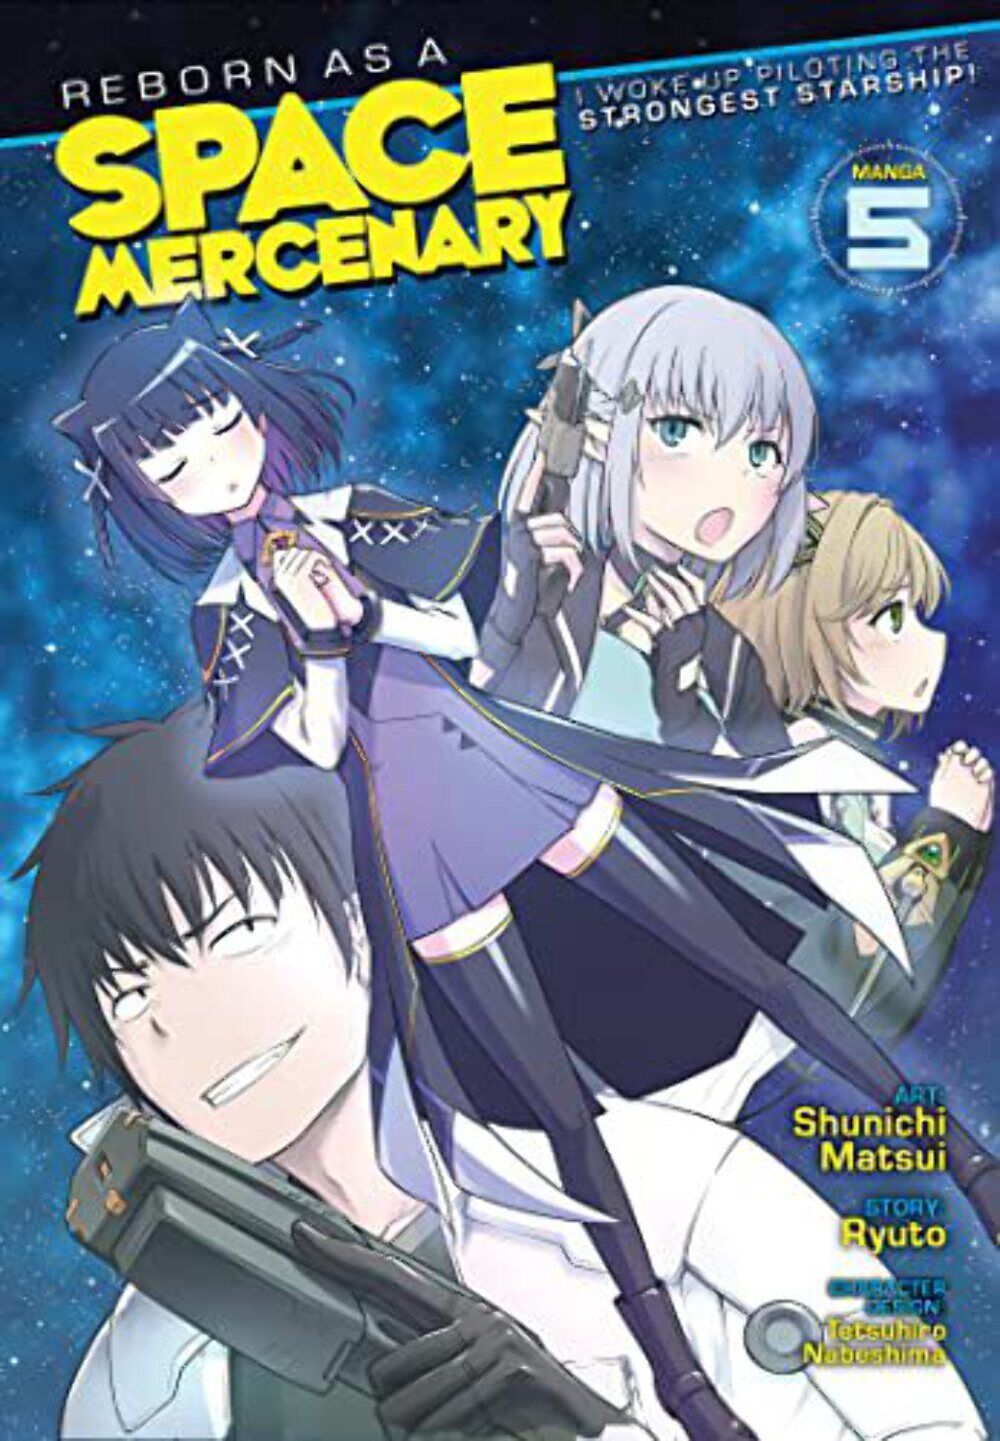 Reborn as a Space Mercenary Vol 5 Manga I Woke Up Piloting The Strongest Station